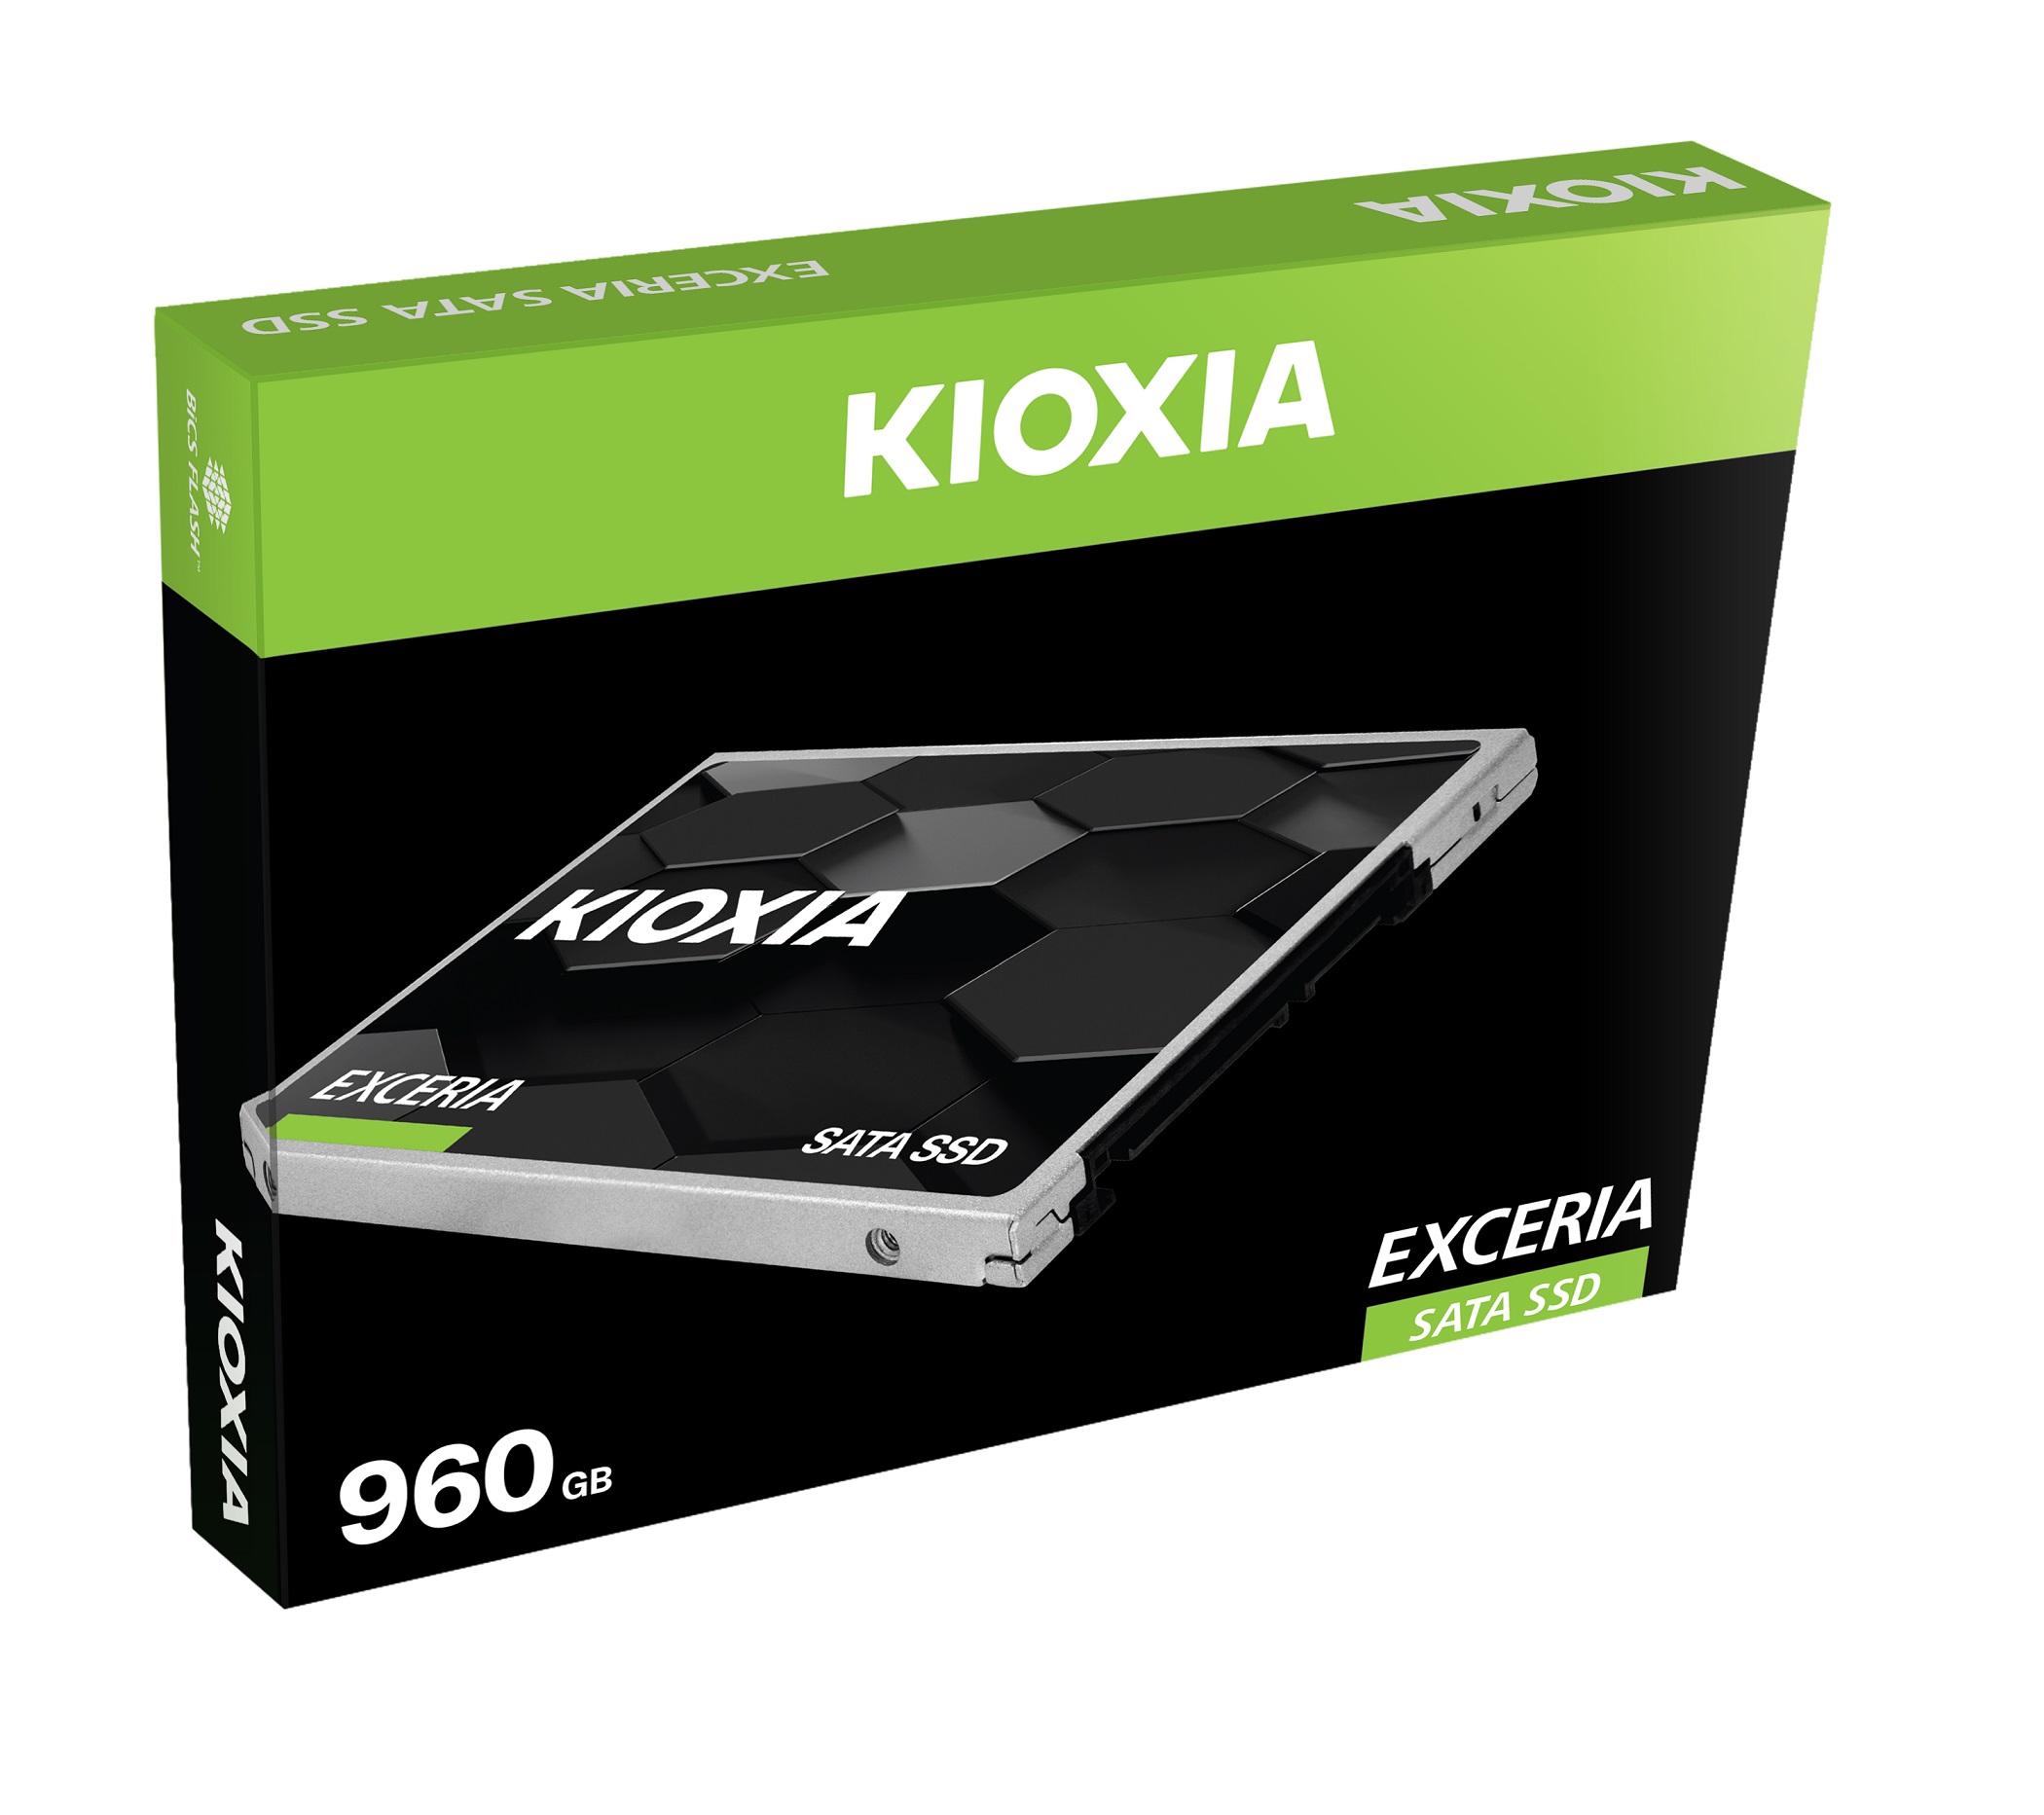 KIOXIA EXCERIA 960 GB 2.5" SATA3 SSD 555/540 (LTC10Z960GG8)